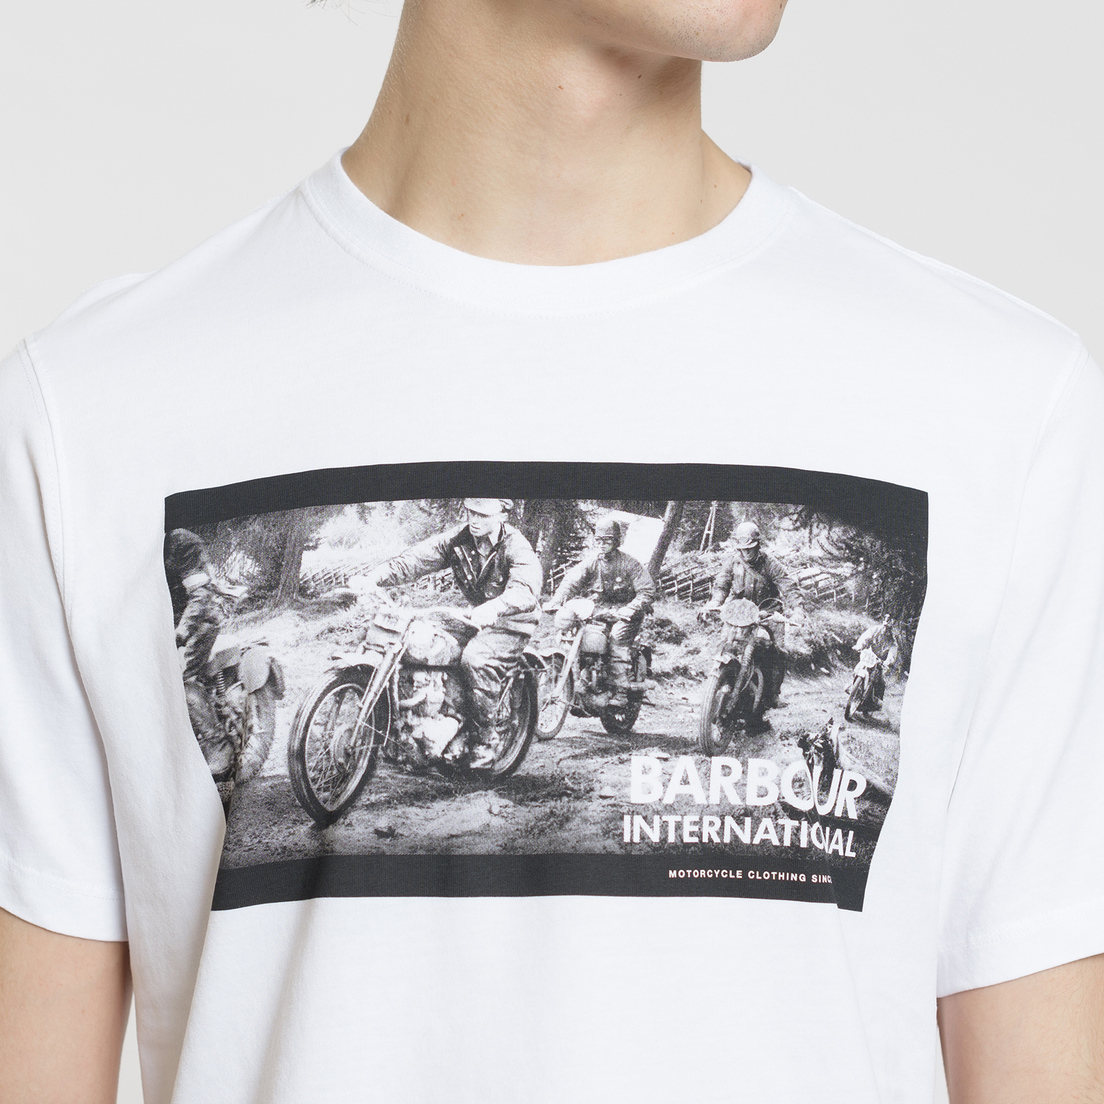 Barbour Мужская футболка International Archive